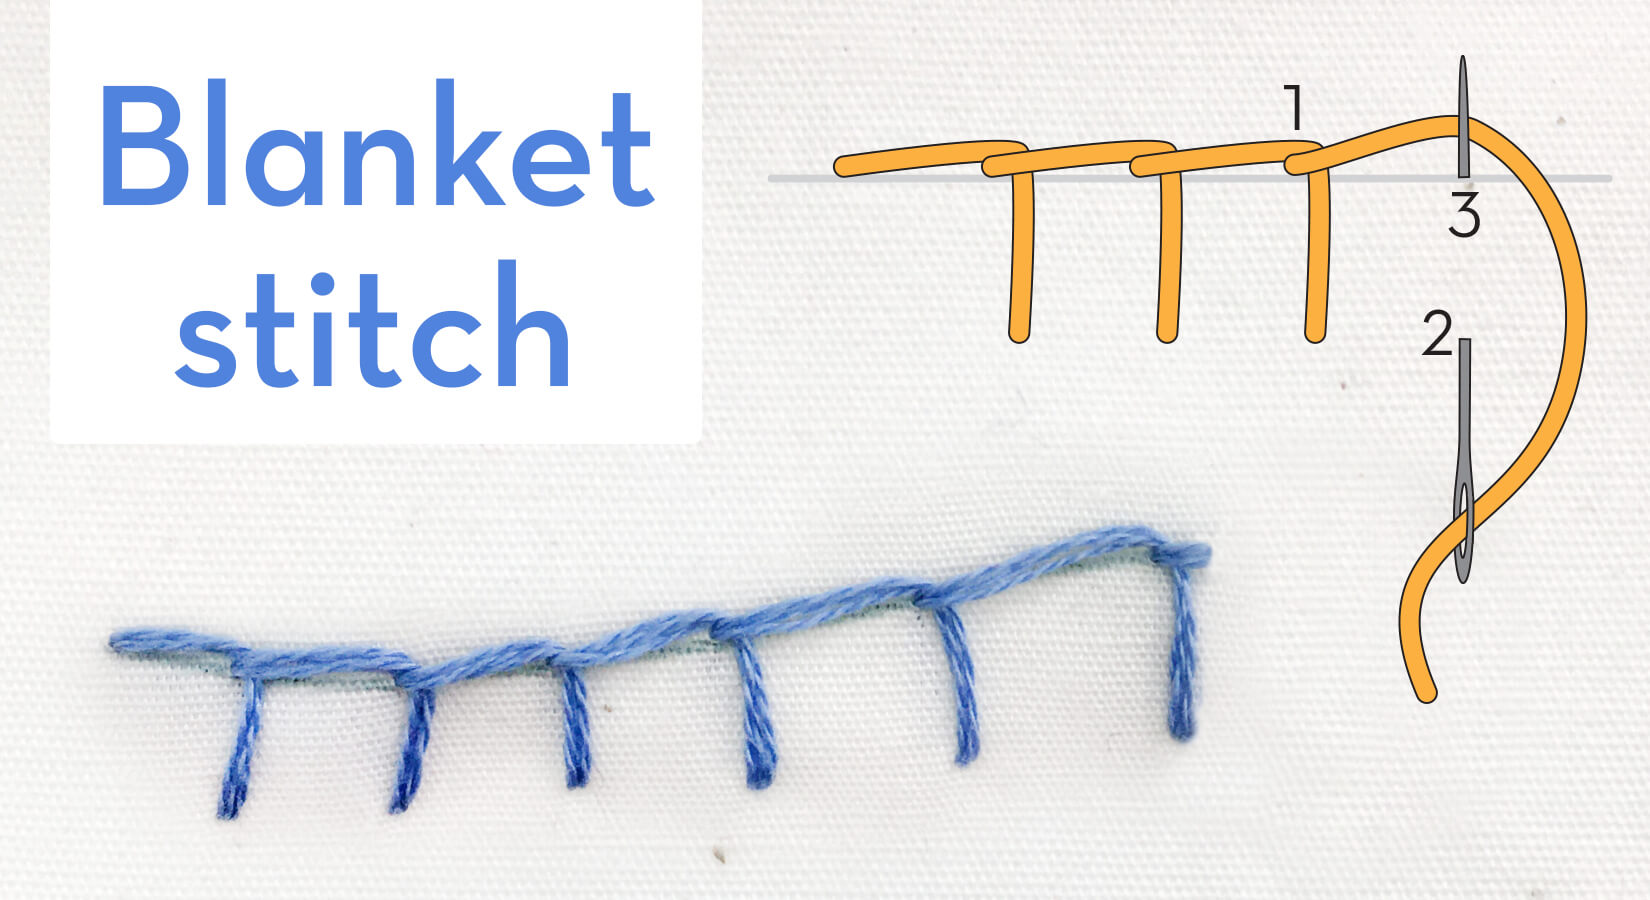 Blanket stitch - embroidery stitches